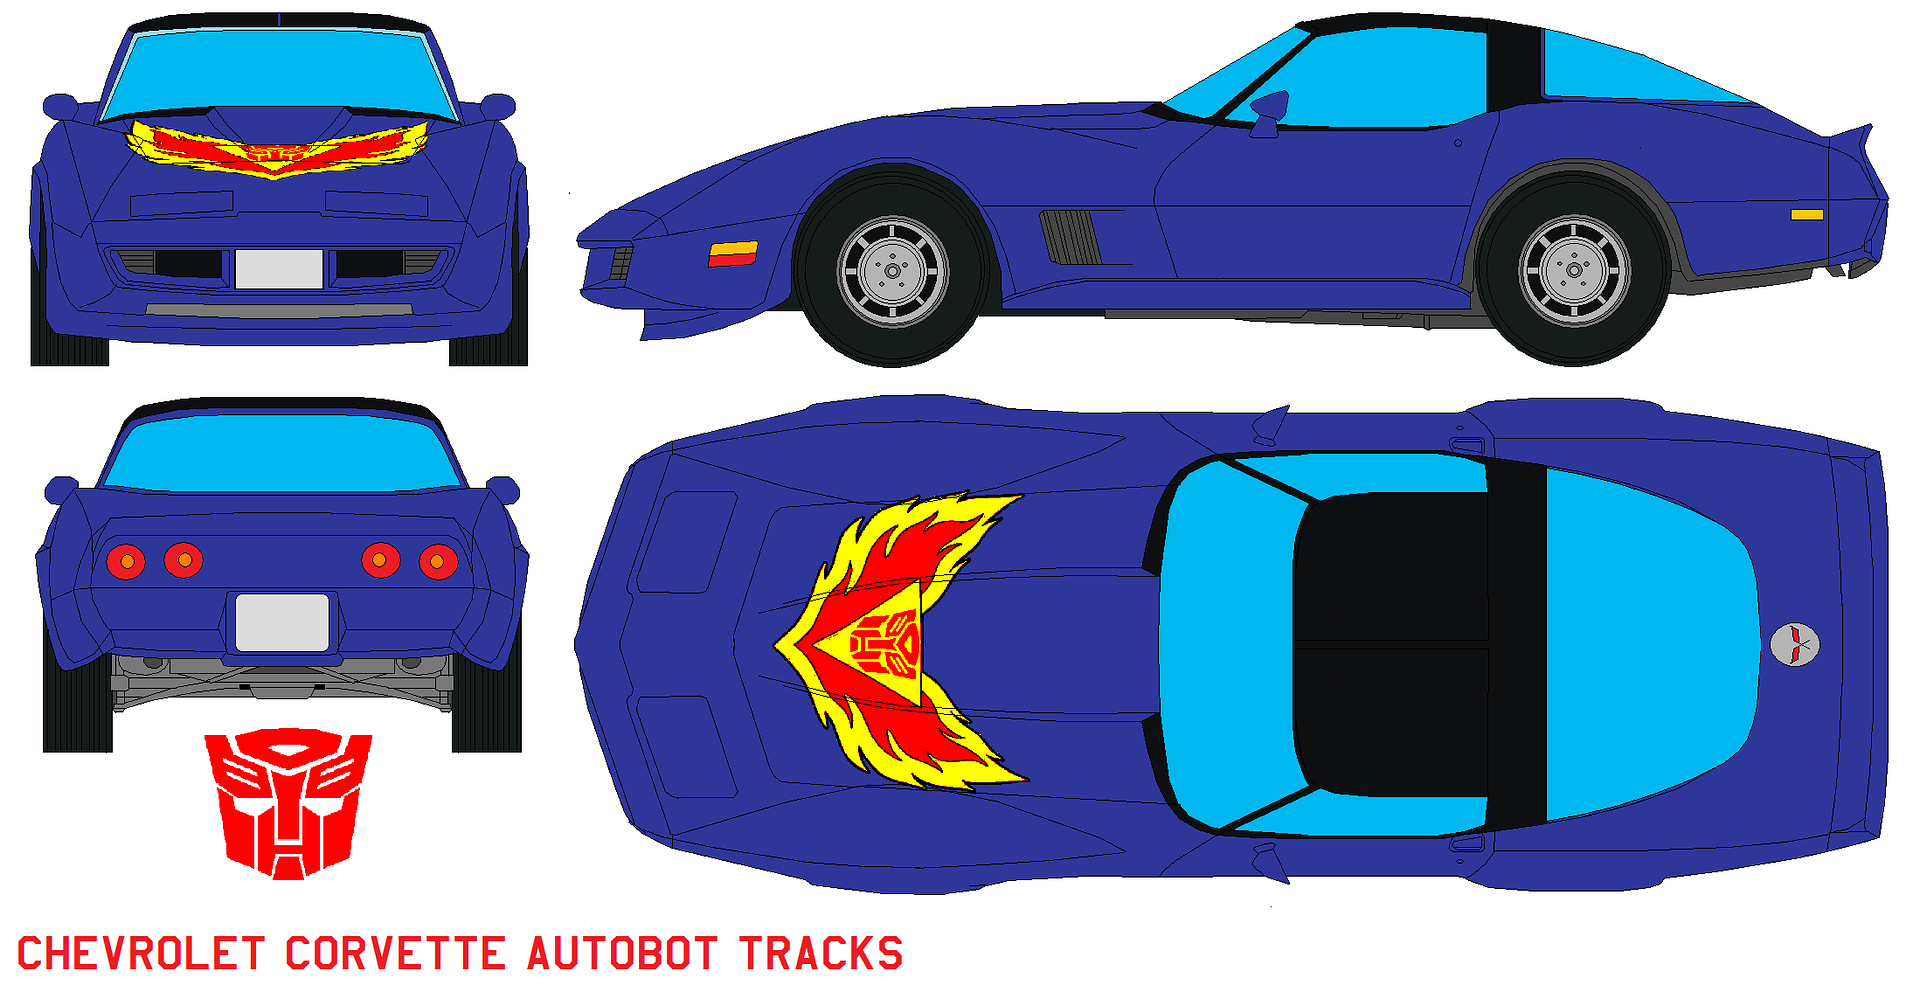 ChevroletCorvetteautobotTracks.png